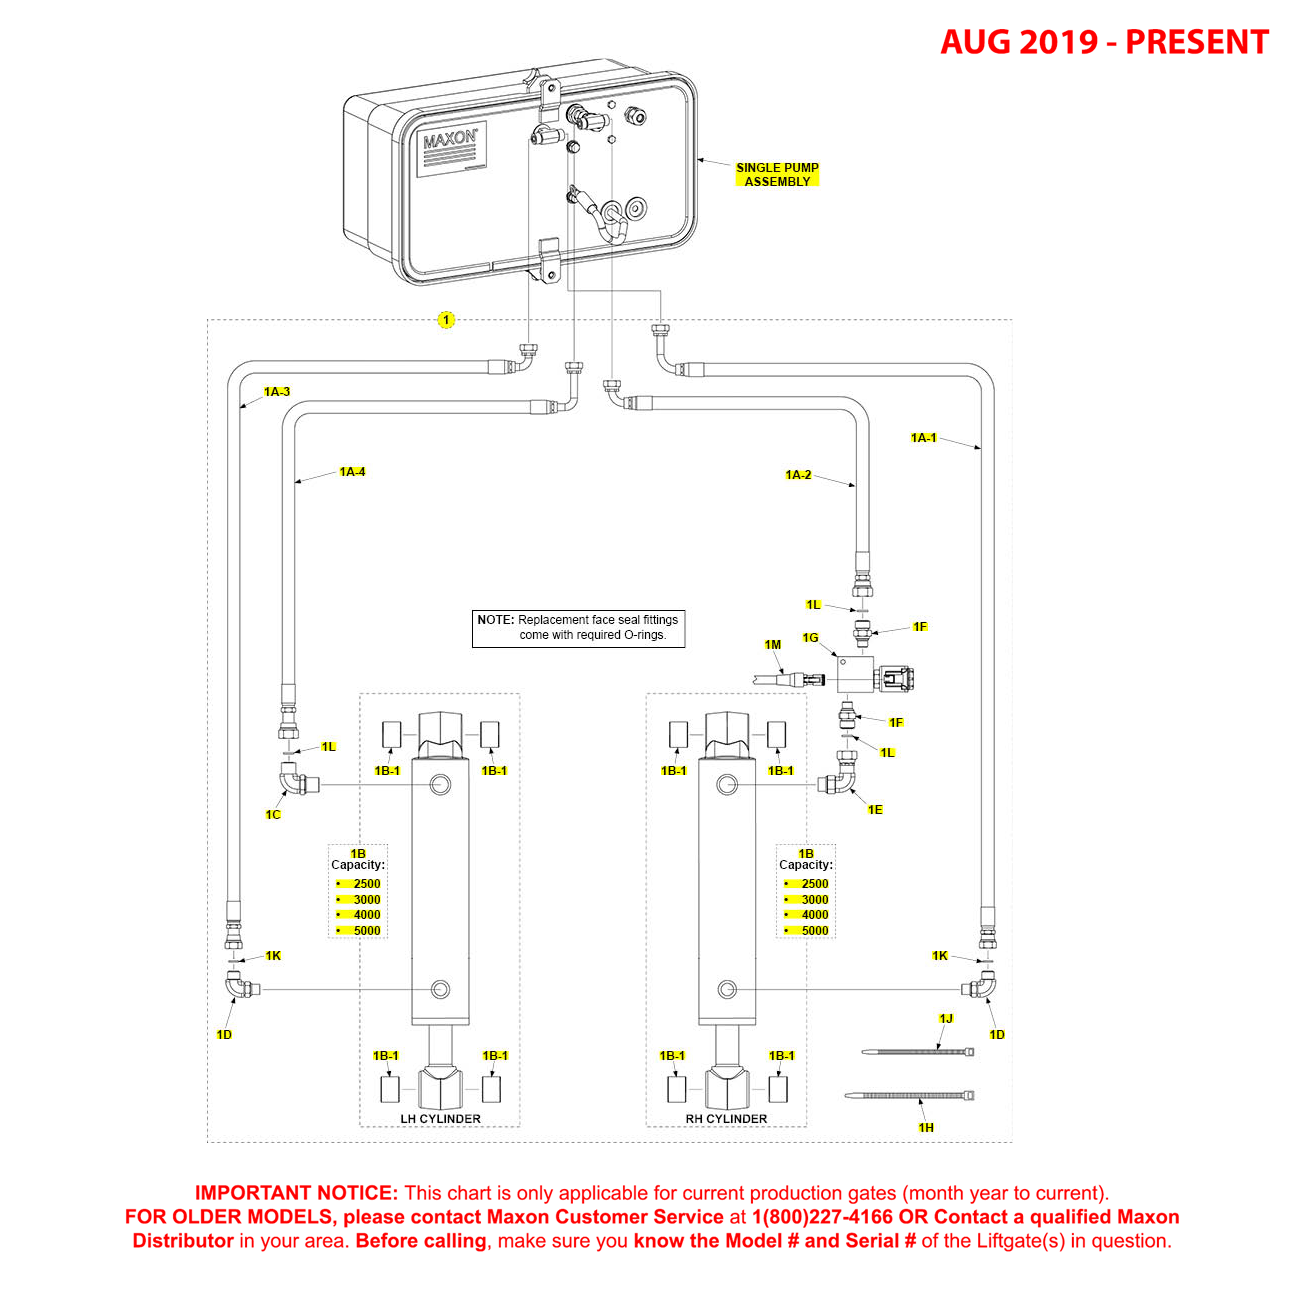 Maxon GPT (Aug 2019 - Present) Center Mount Single Pump Hydraulic Systems Diagram